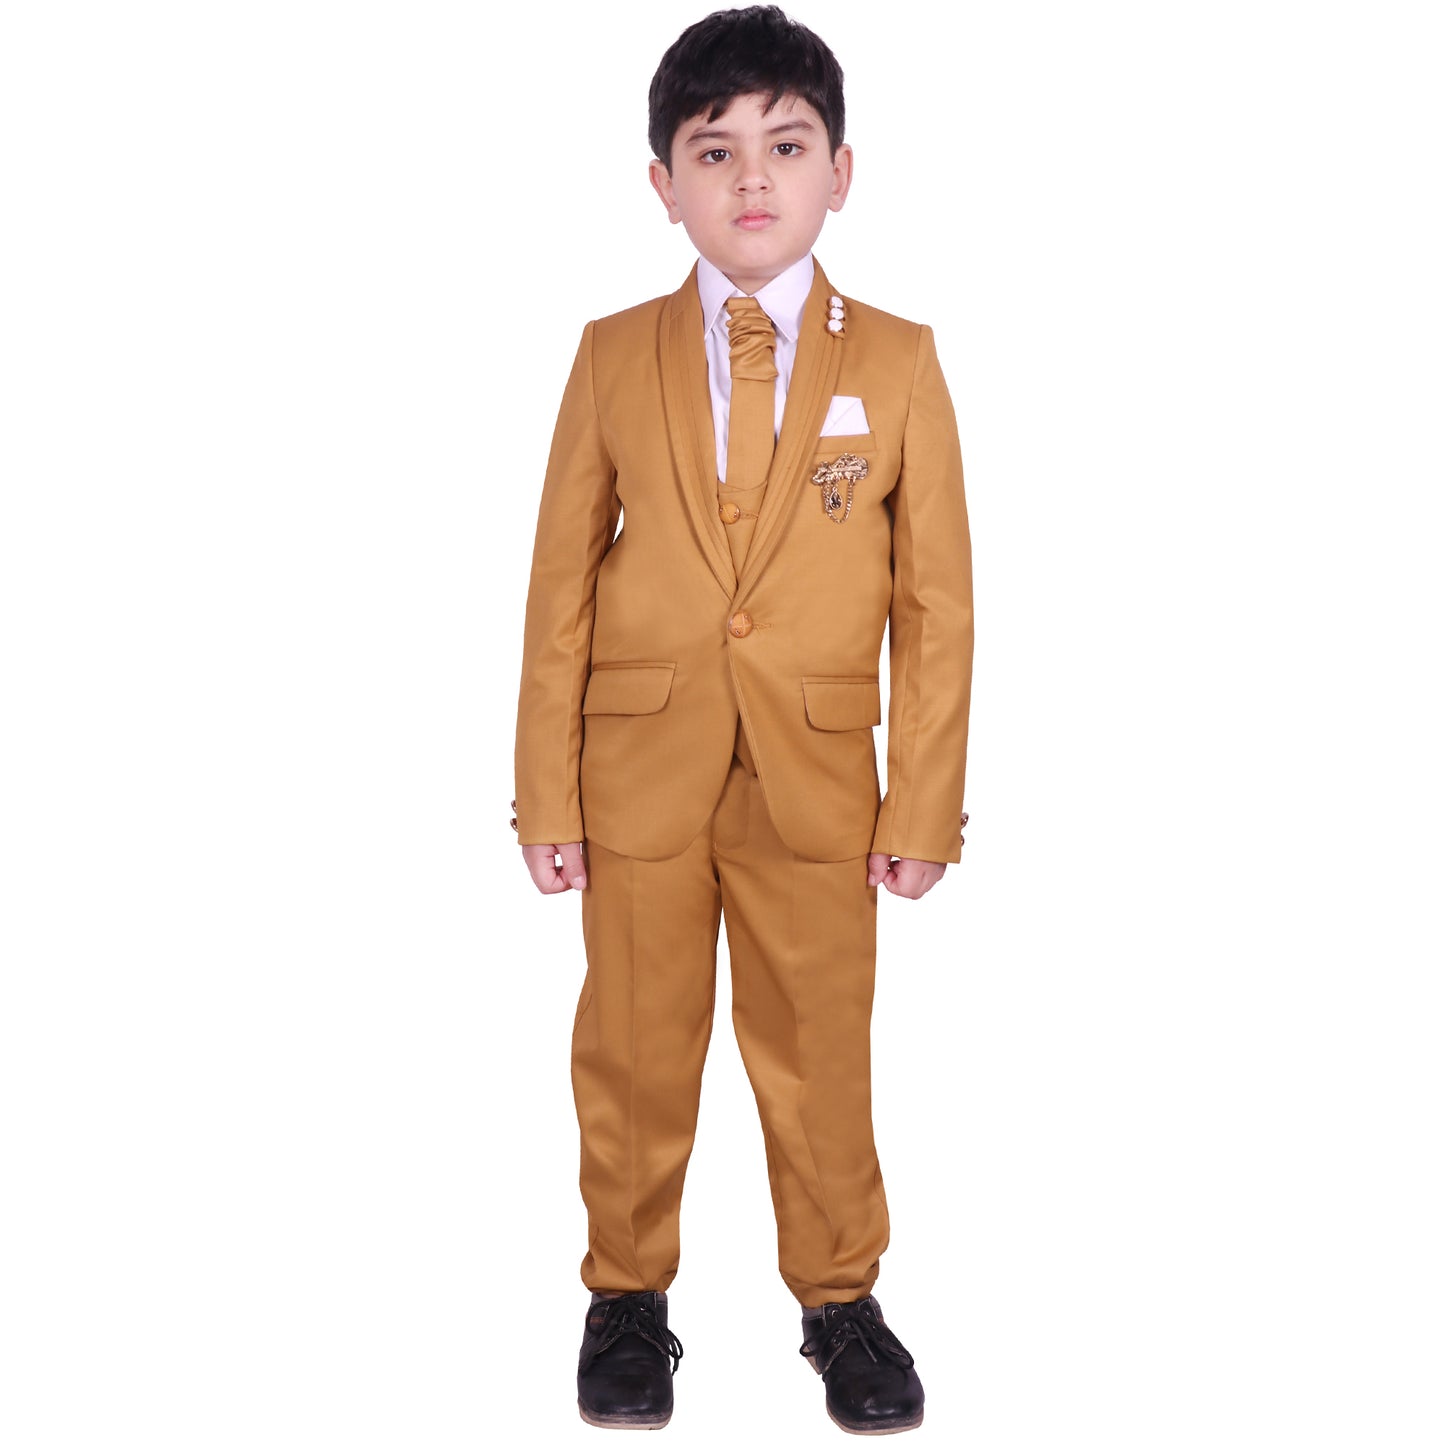 SG YUVRAJ Suits & Sets For Boys (TP-1051)